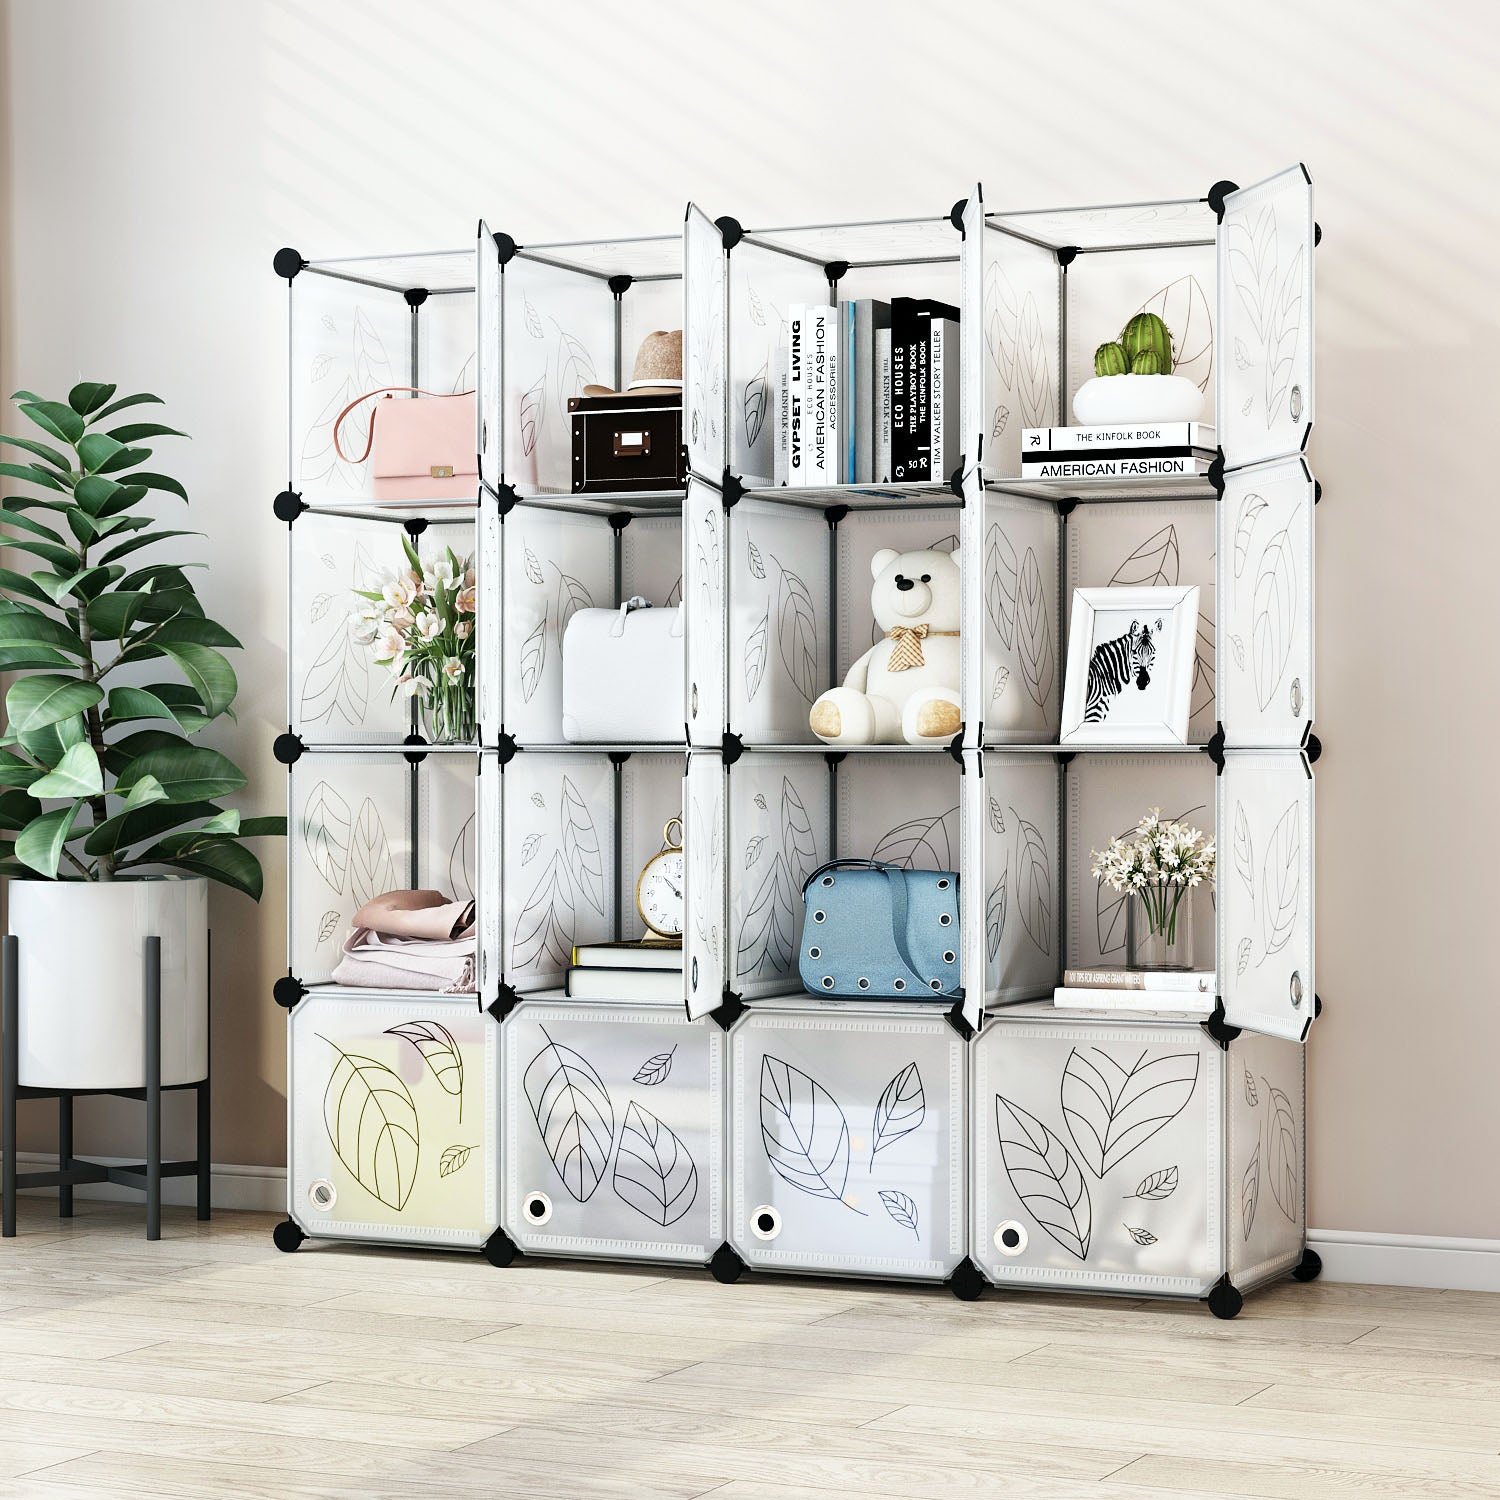 8/12/16/20/30 Cube Modular Plastic Organizer Storage Shelves